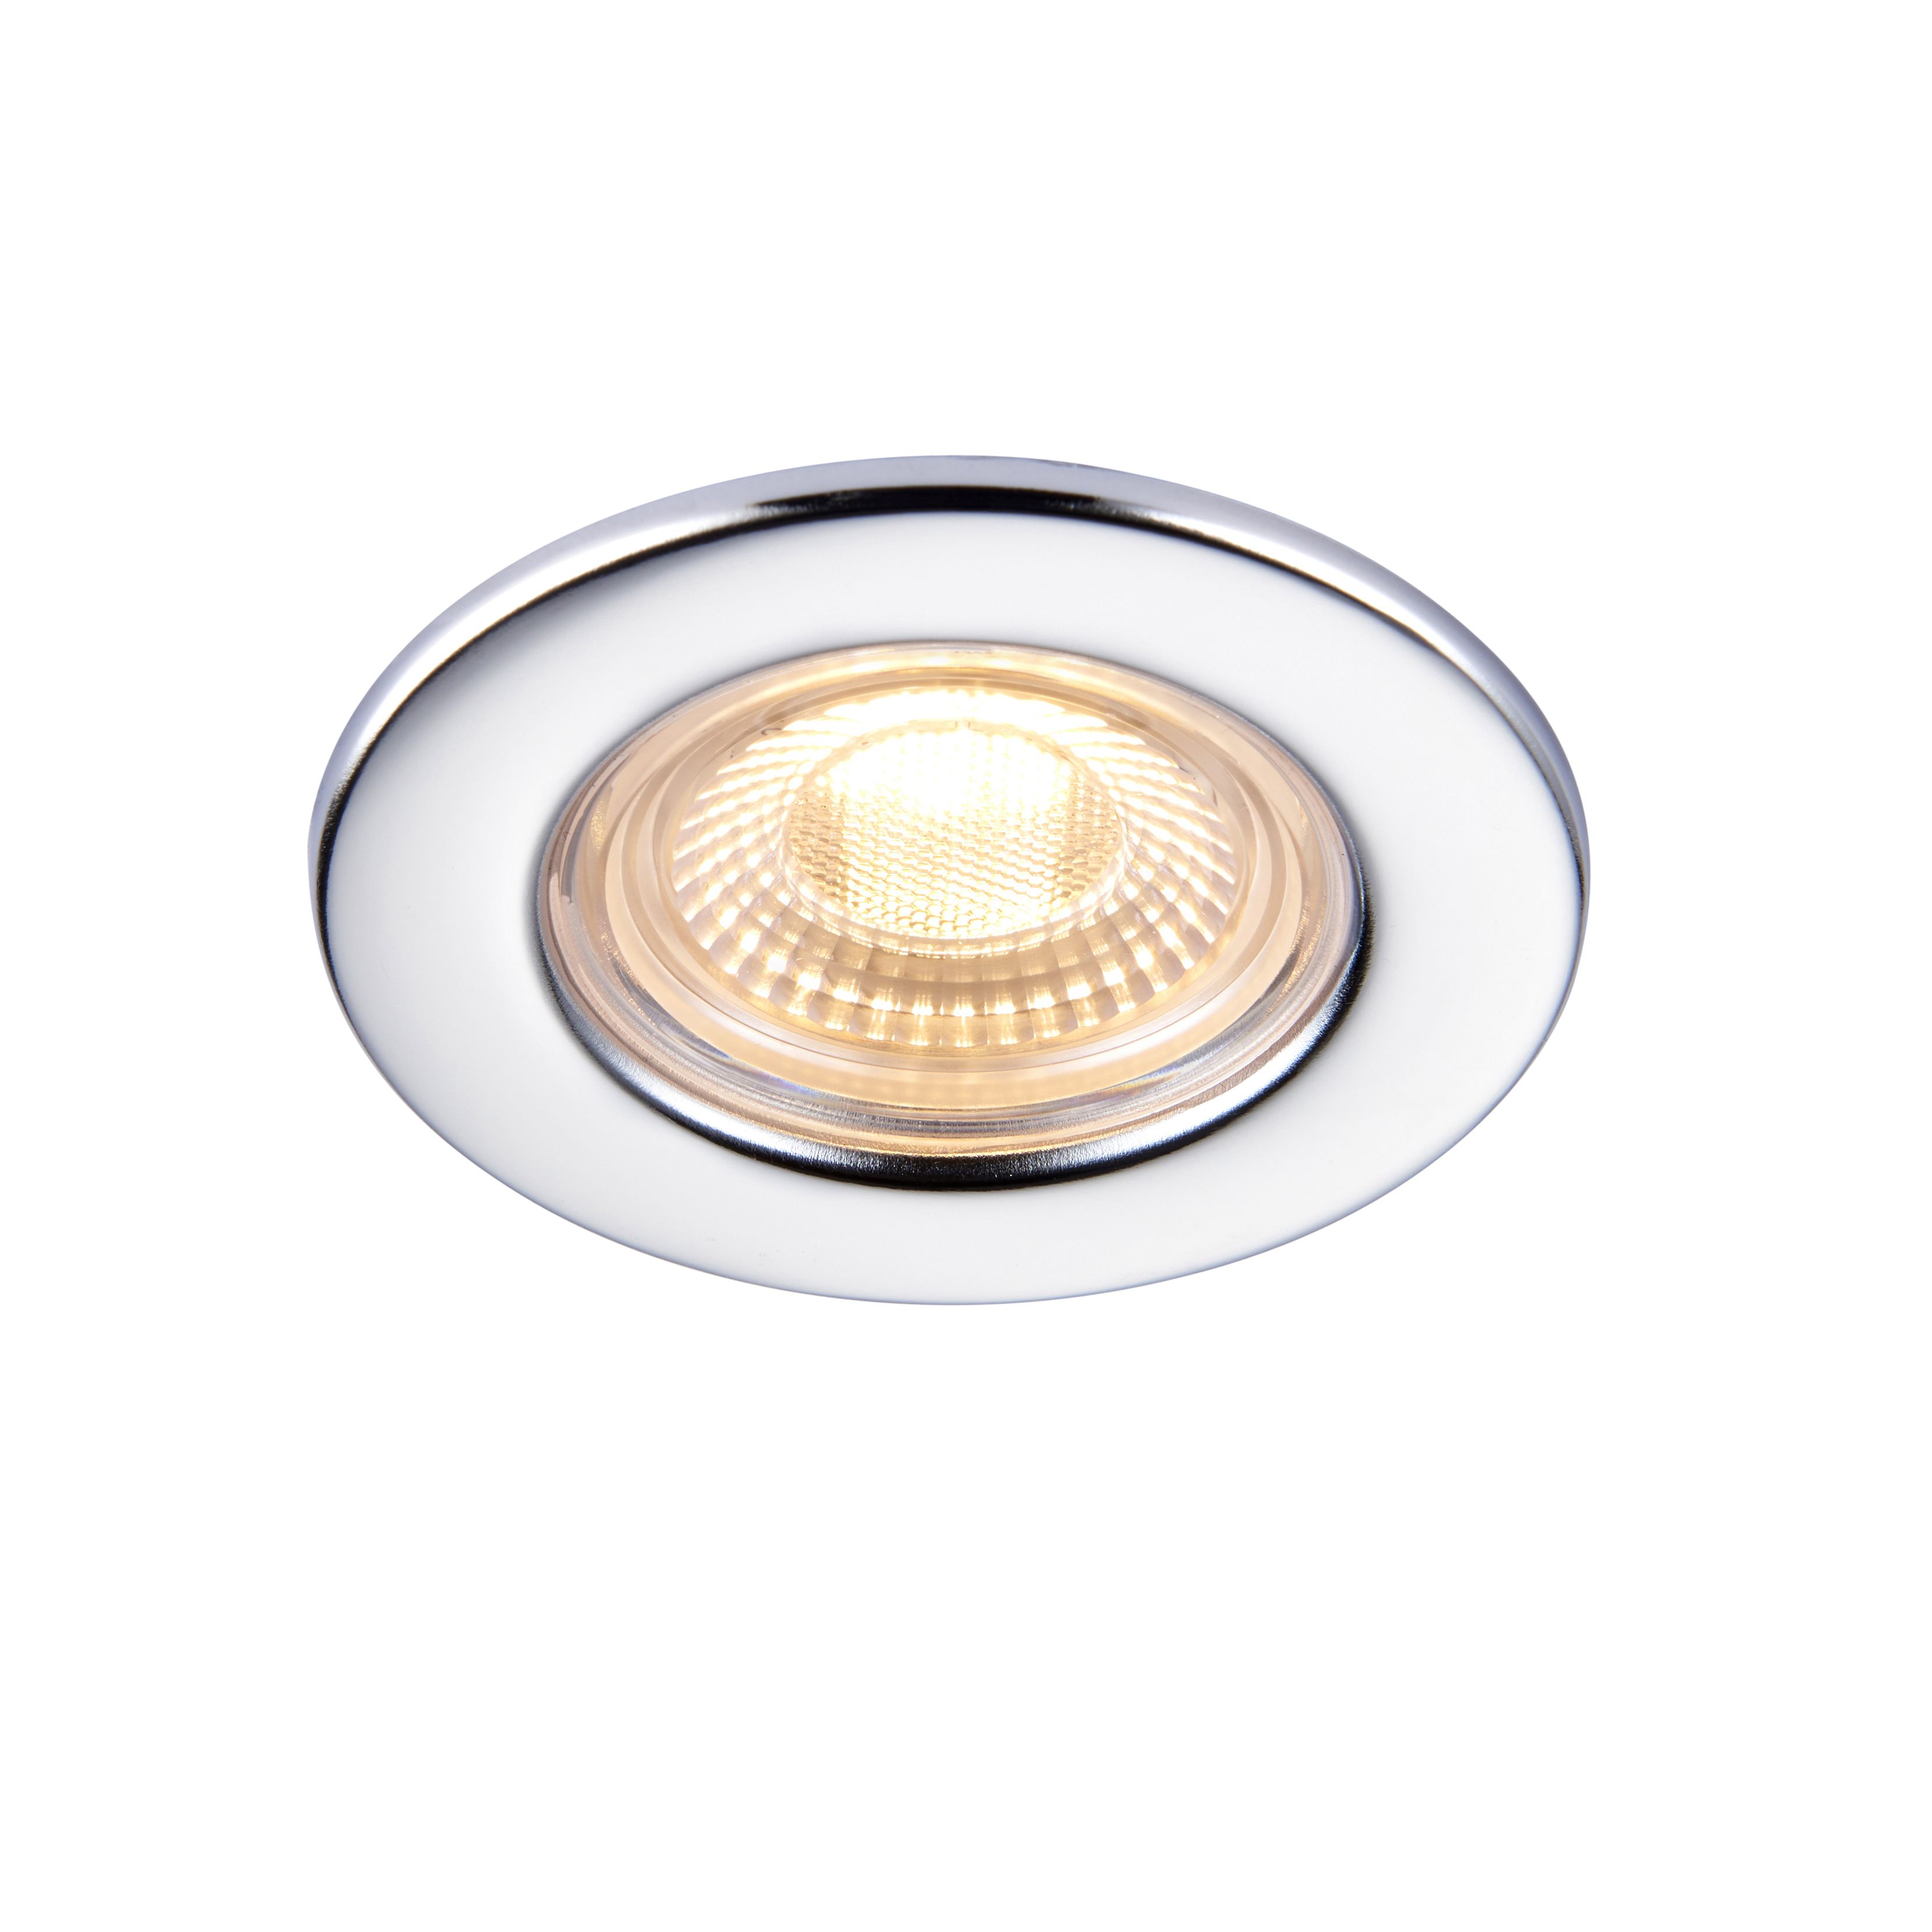 GuardECO Chrome effect Non-adjustable LED Warm white Downlight 6W IP65